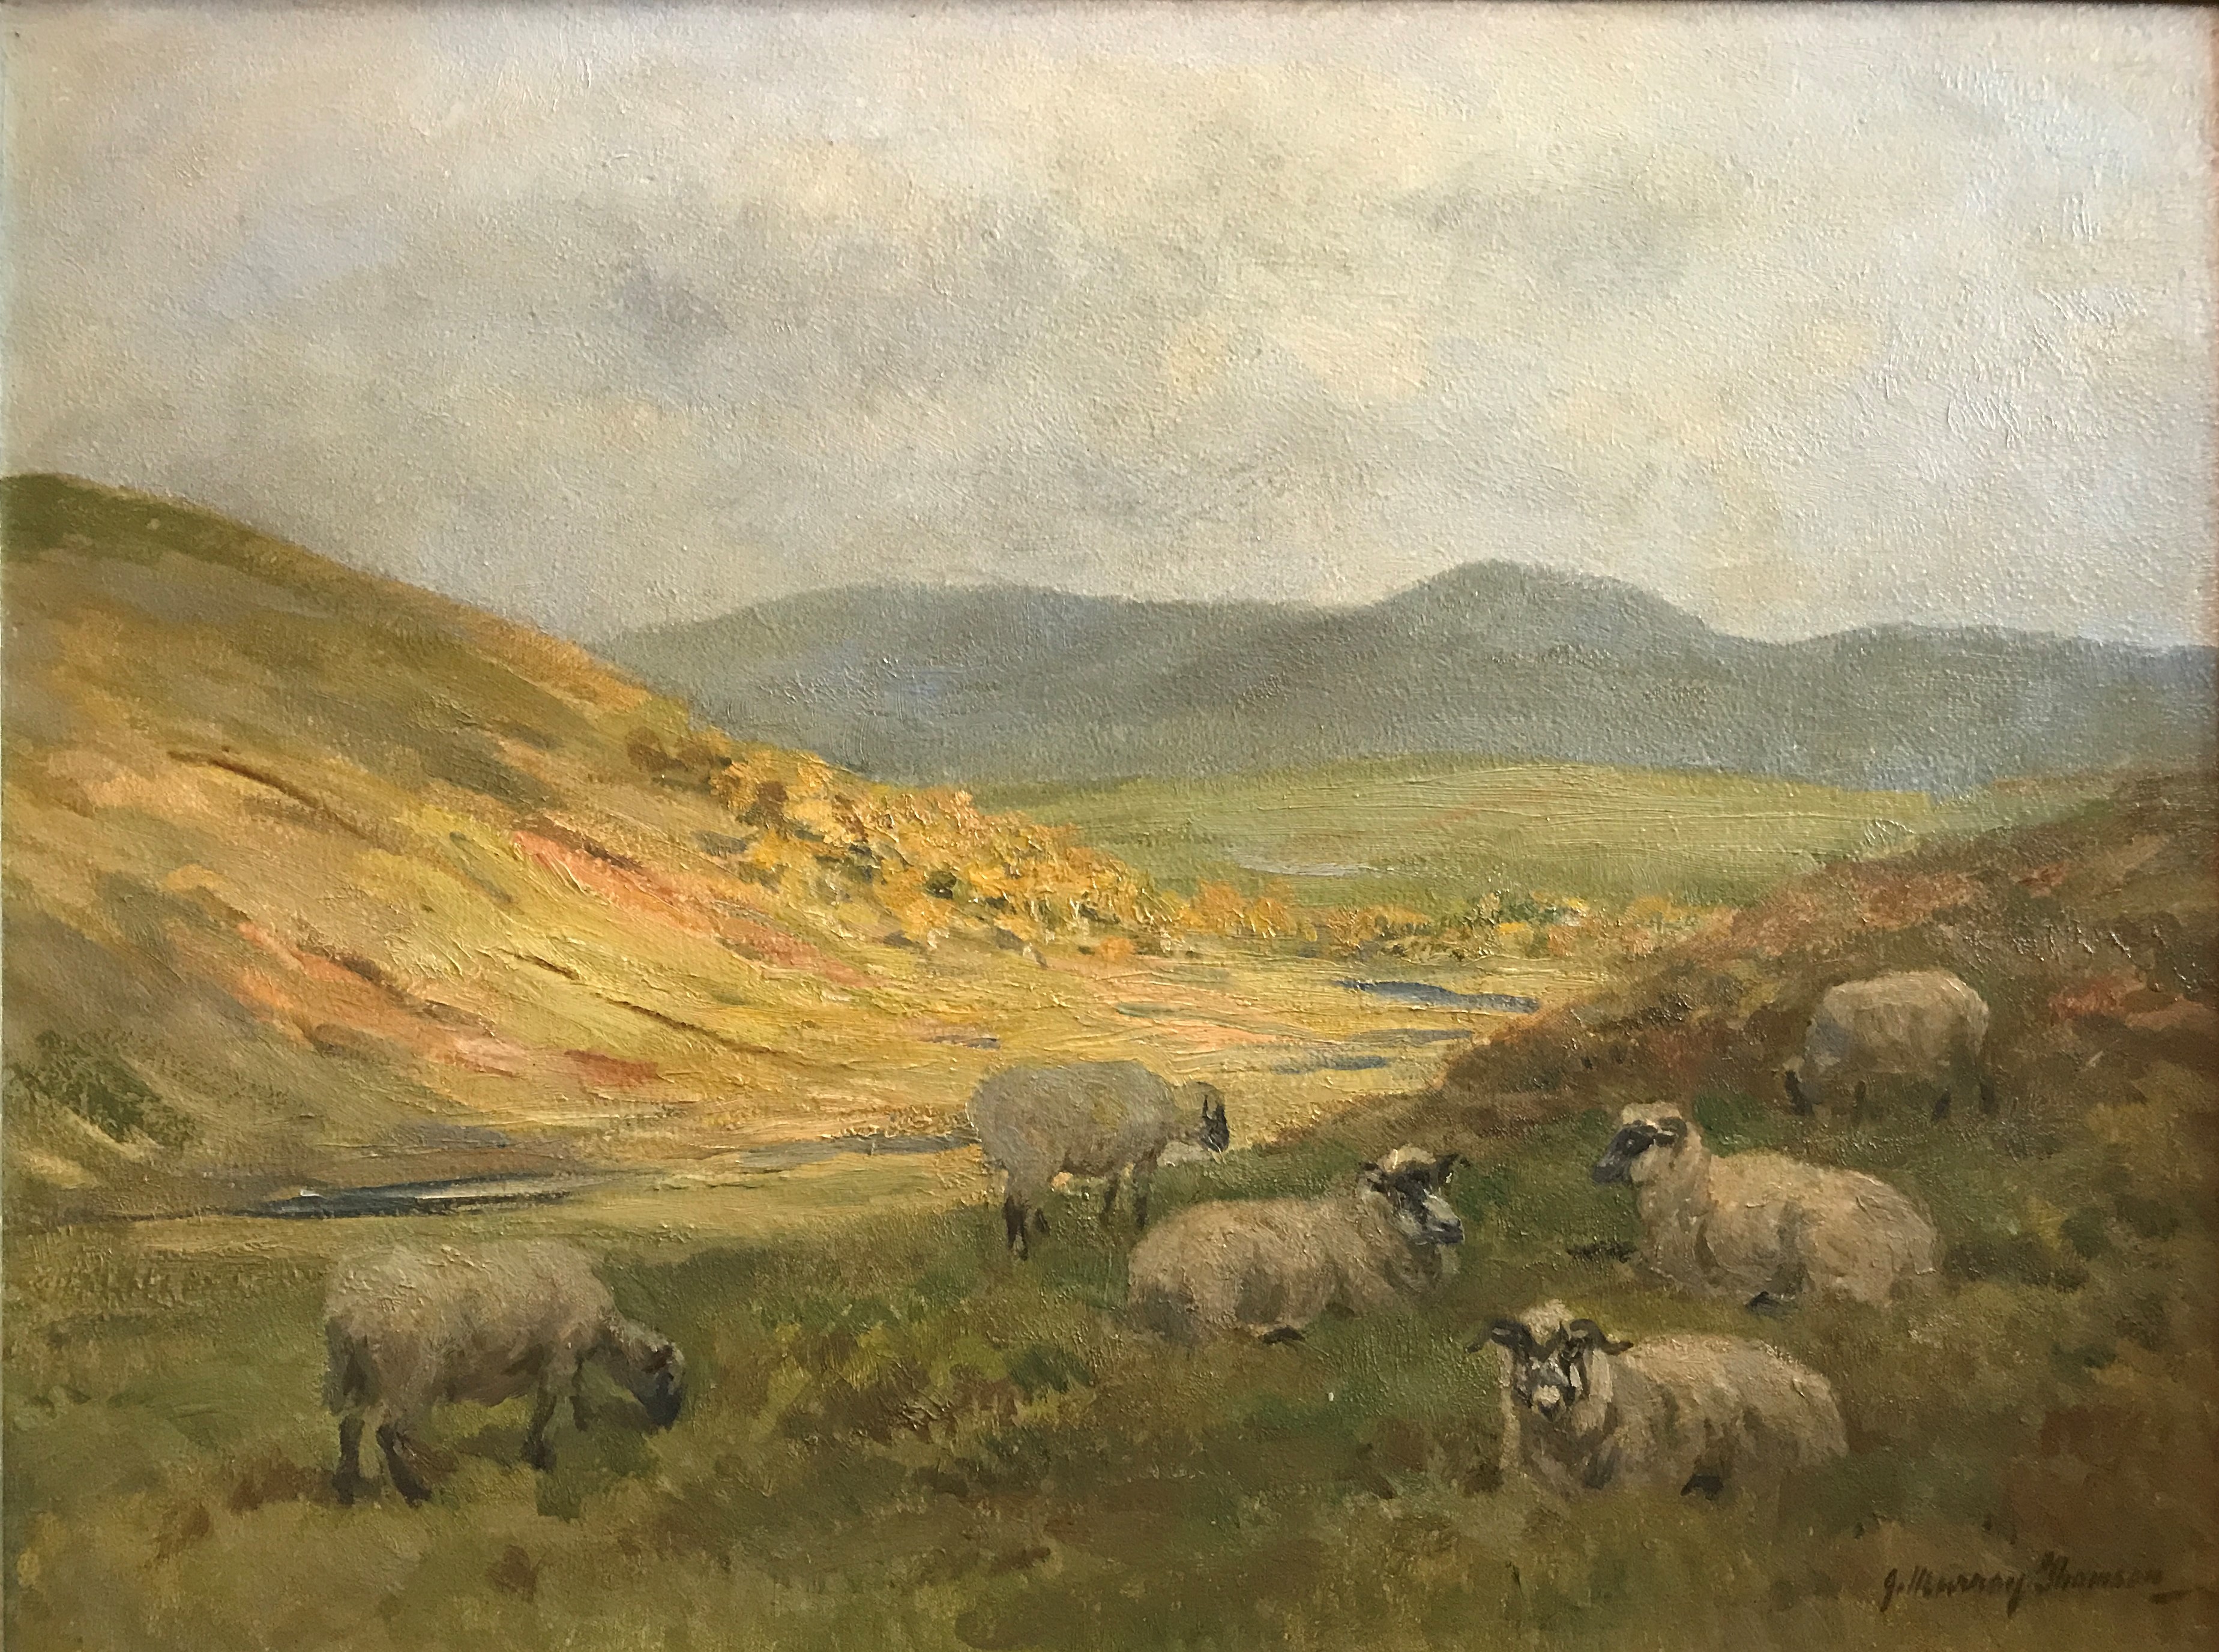 John Murray Thomson 1885-1974 R.S.A, R.S.W, P.S.S.A Sheep on hillside grazing